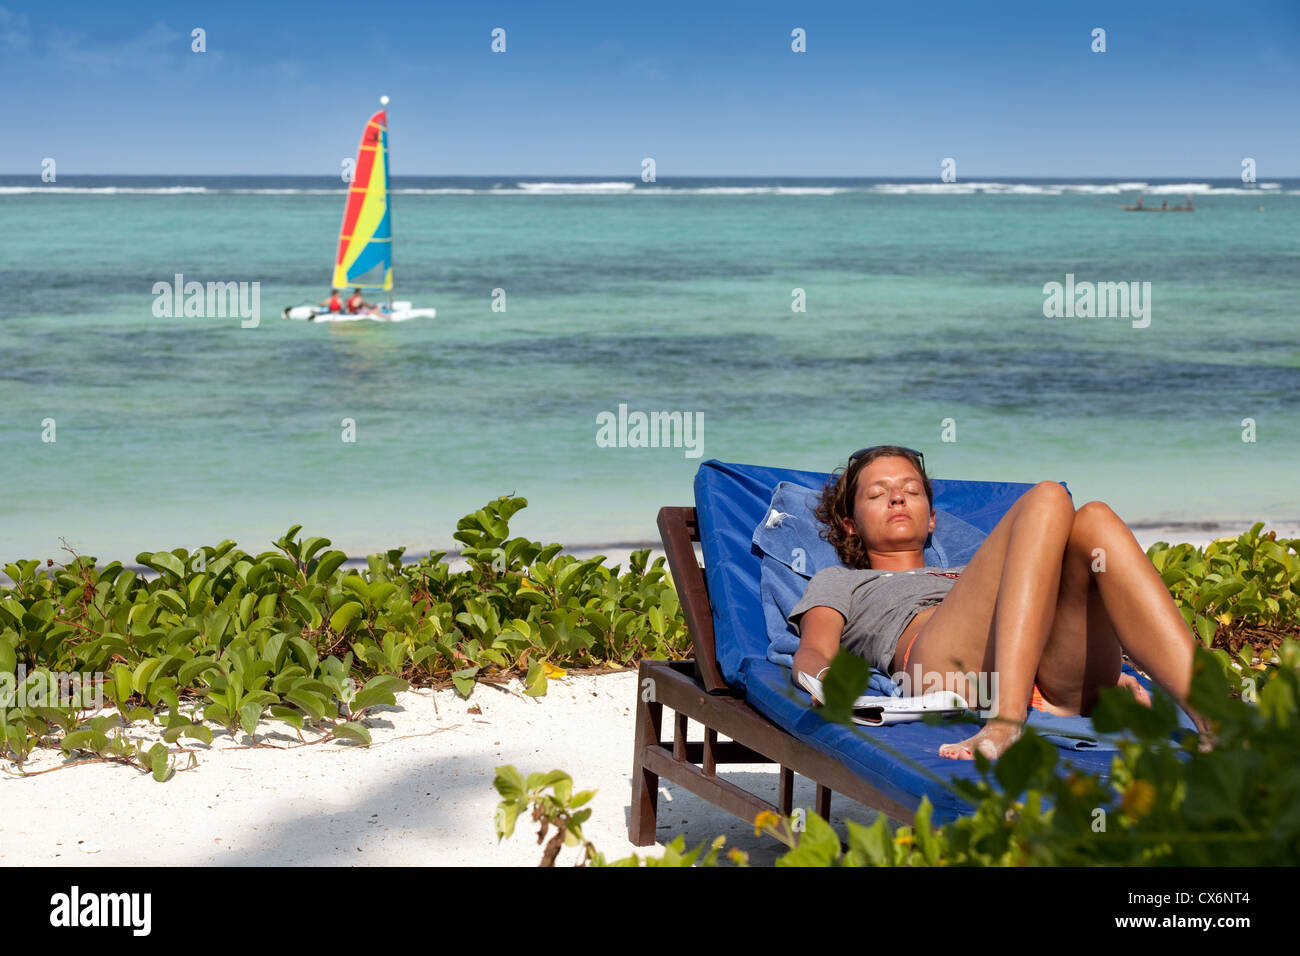 A woman sunbathing on the beach, on a tropical holiday Zanzibar Africa Stock Photo